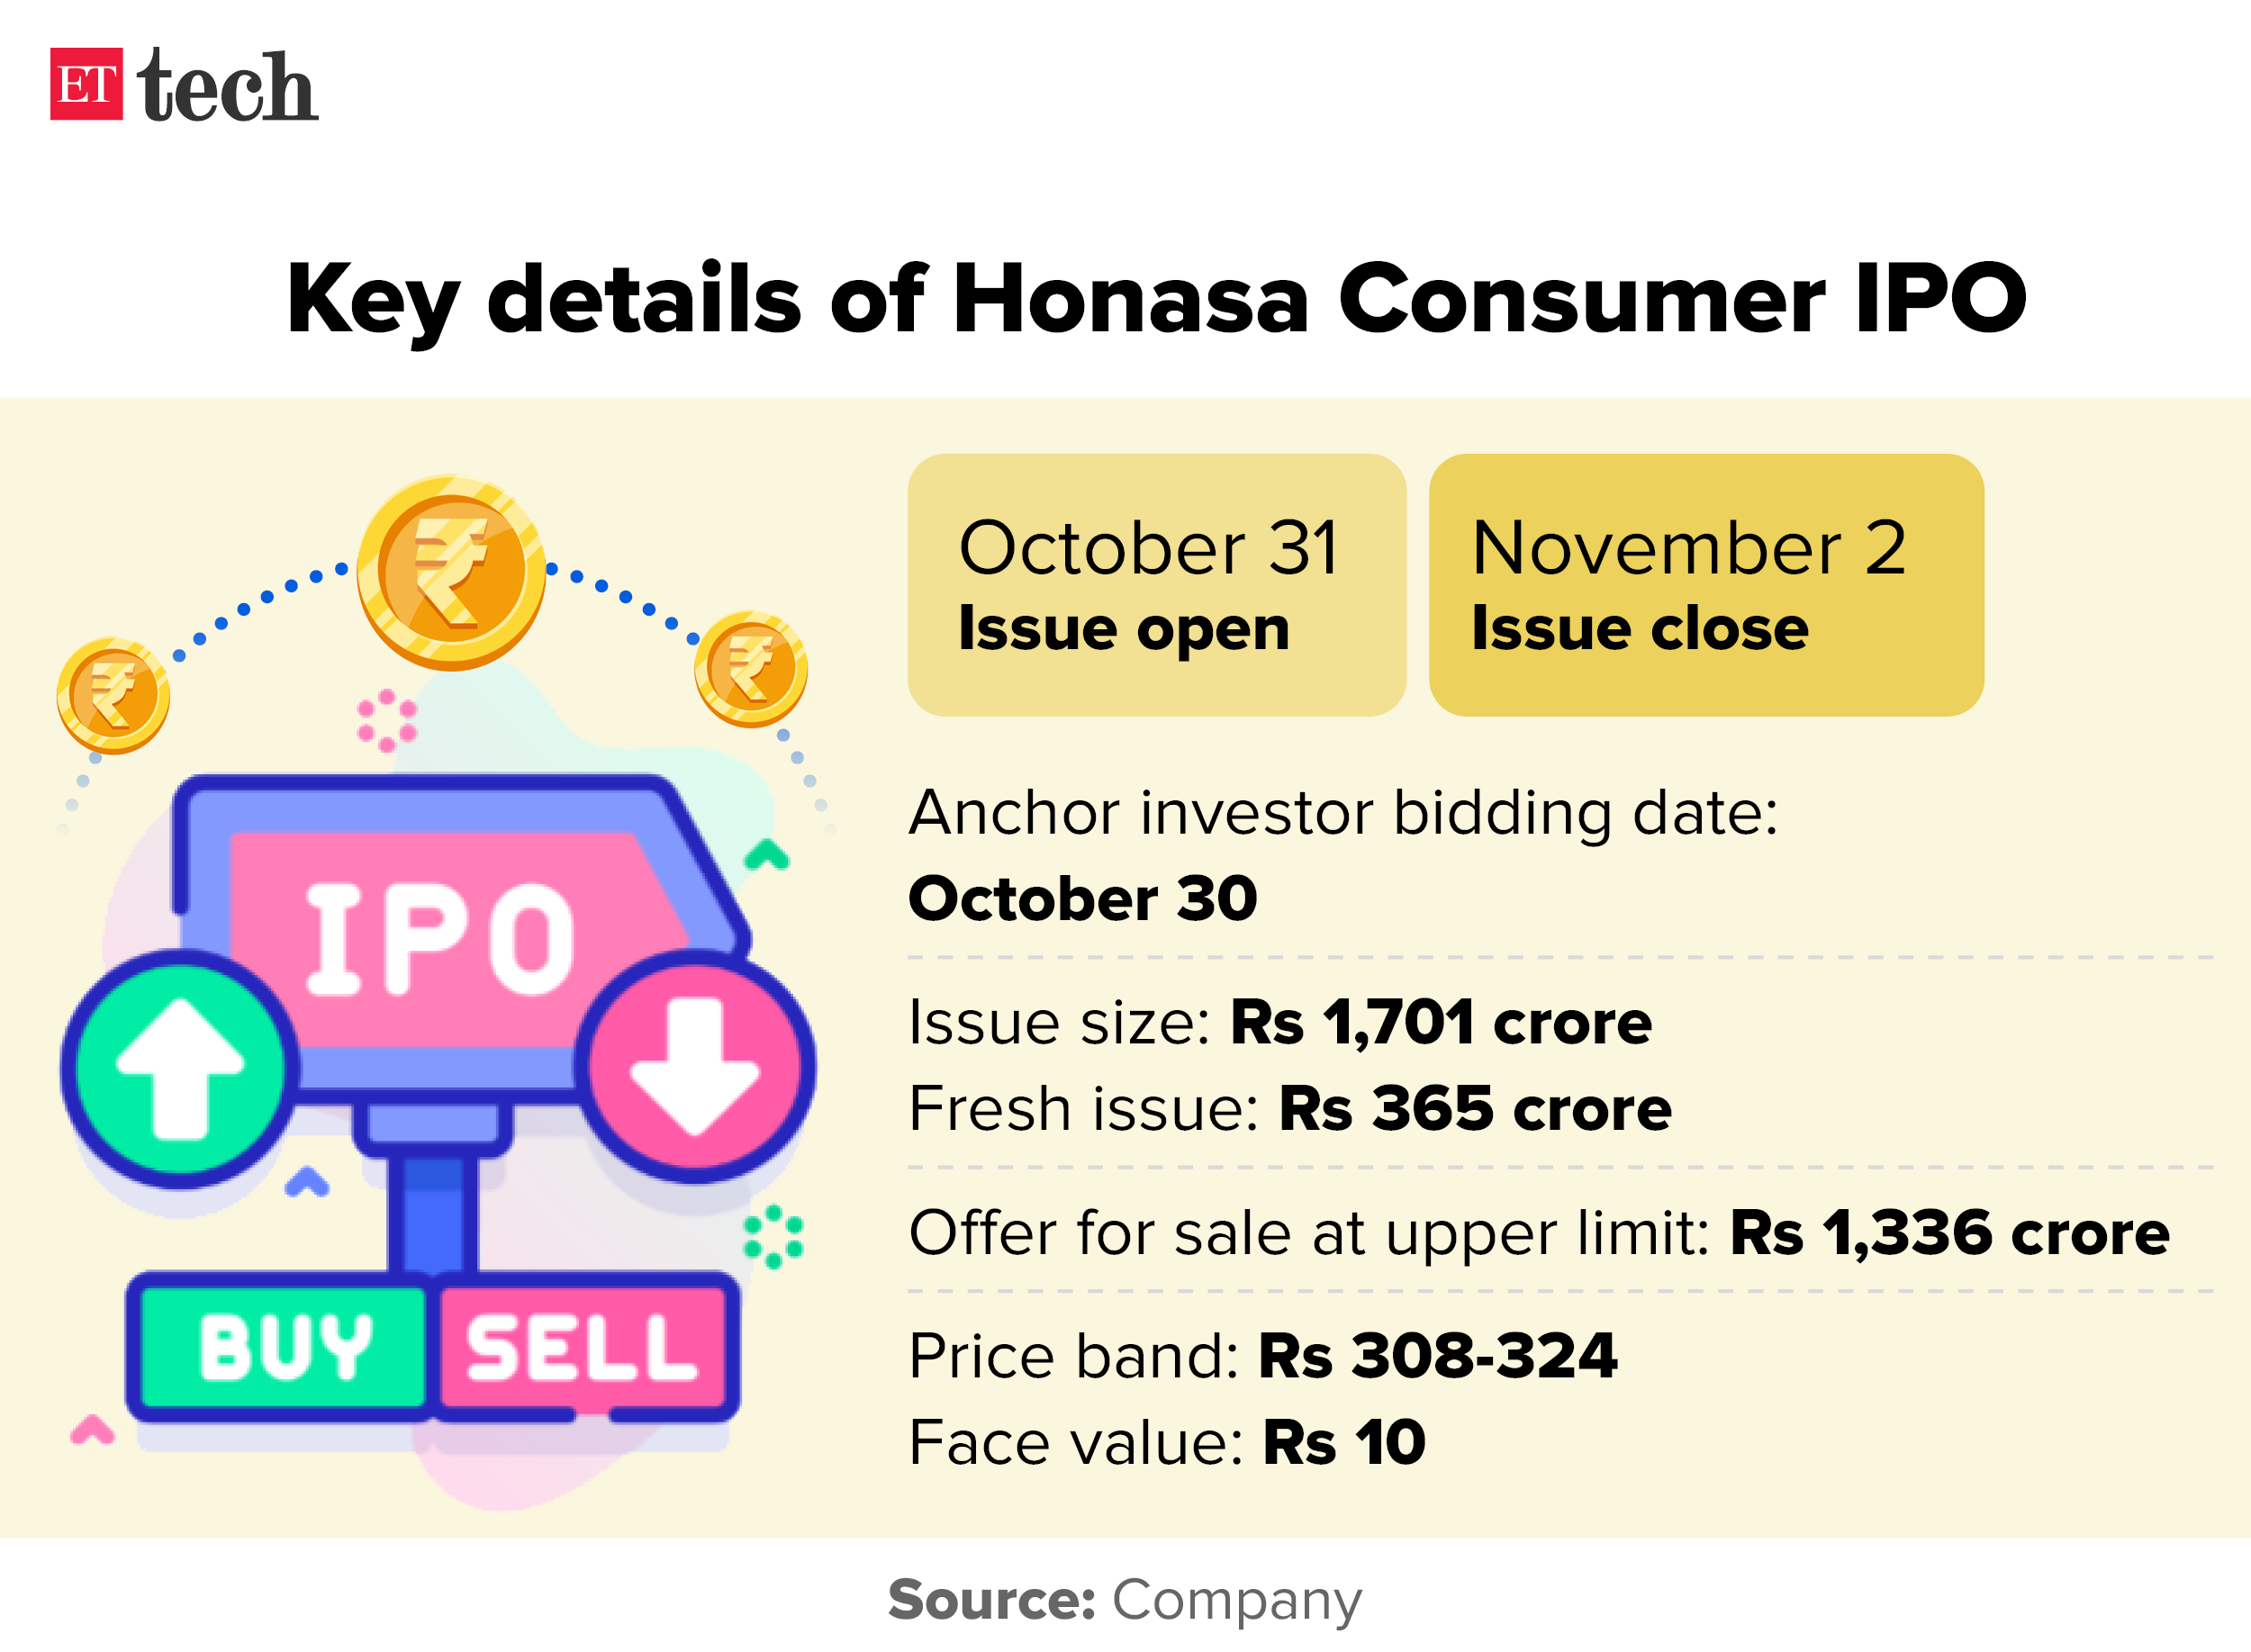 Key details of Honasa Consumer IPO_Graphic_ETTECH